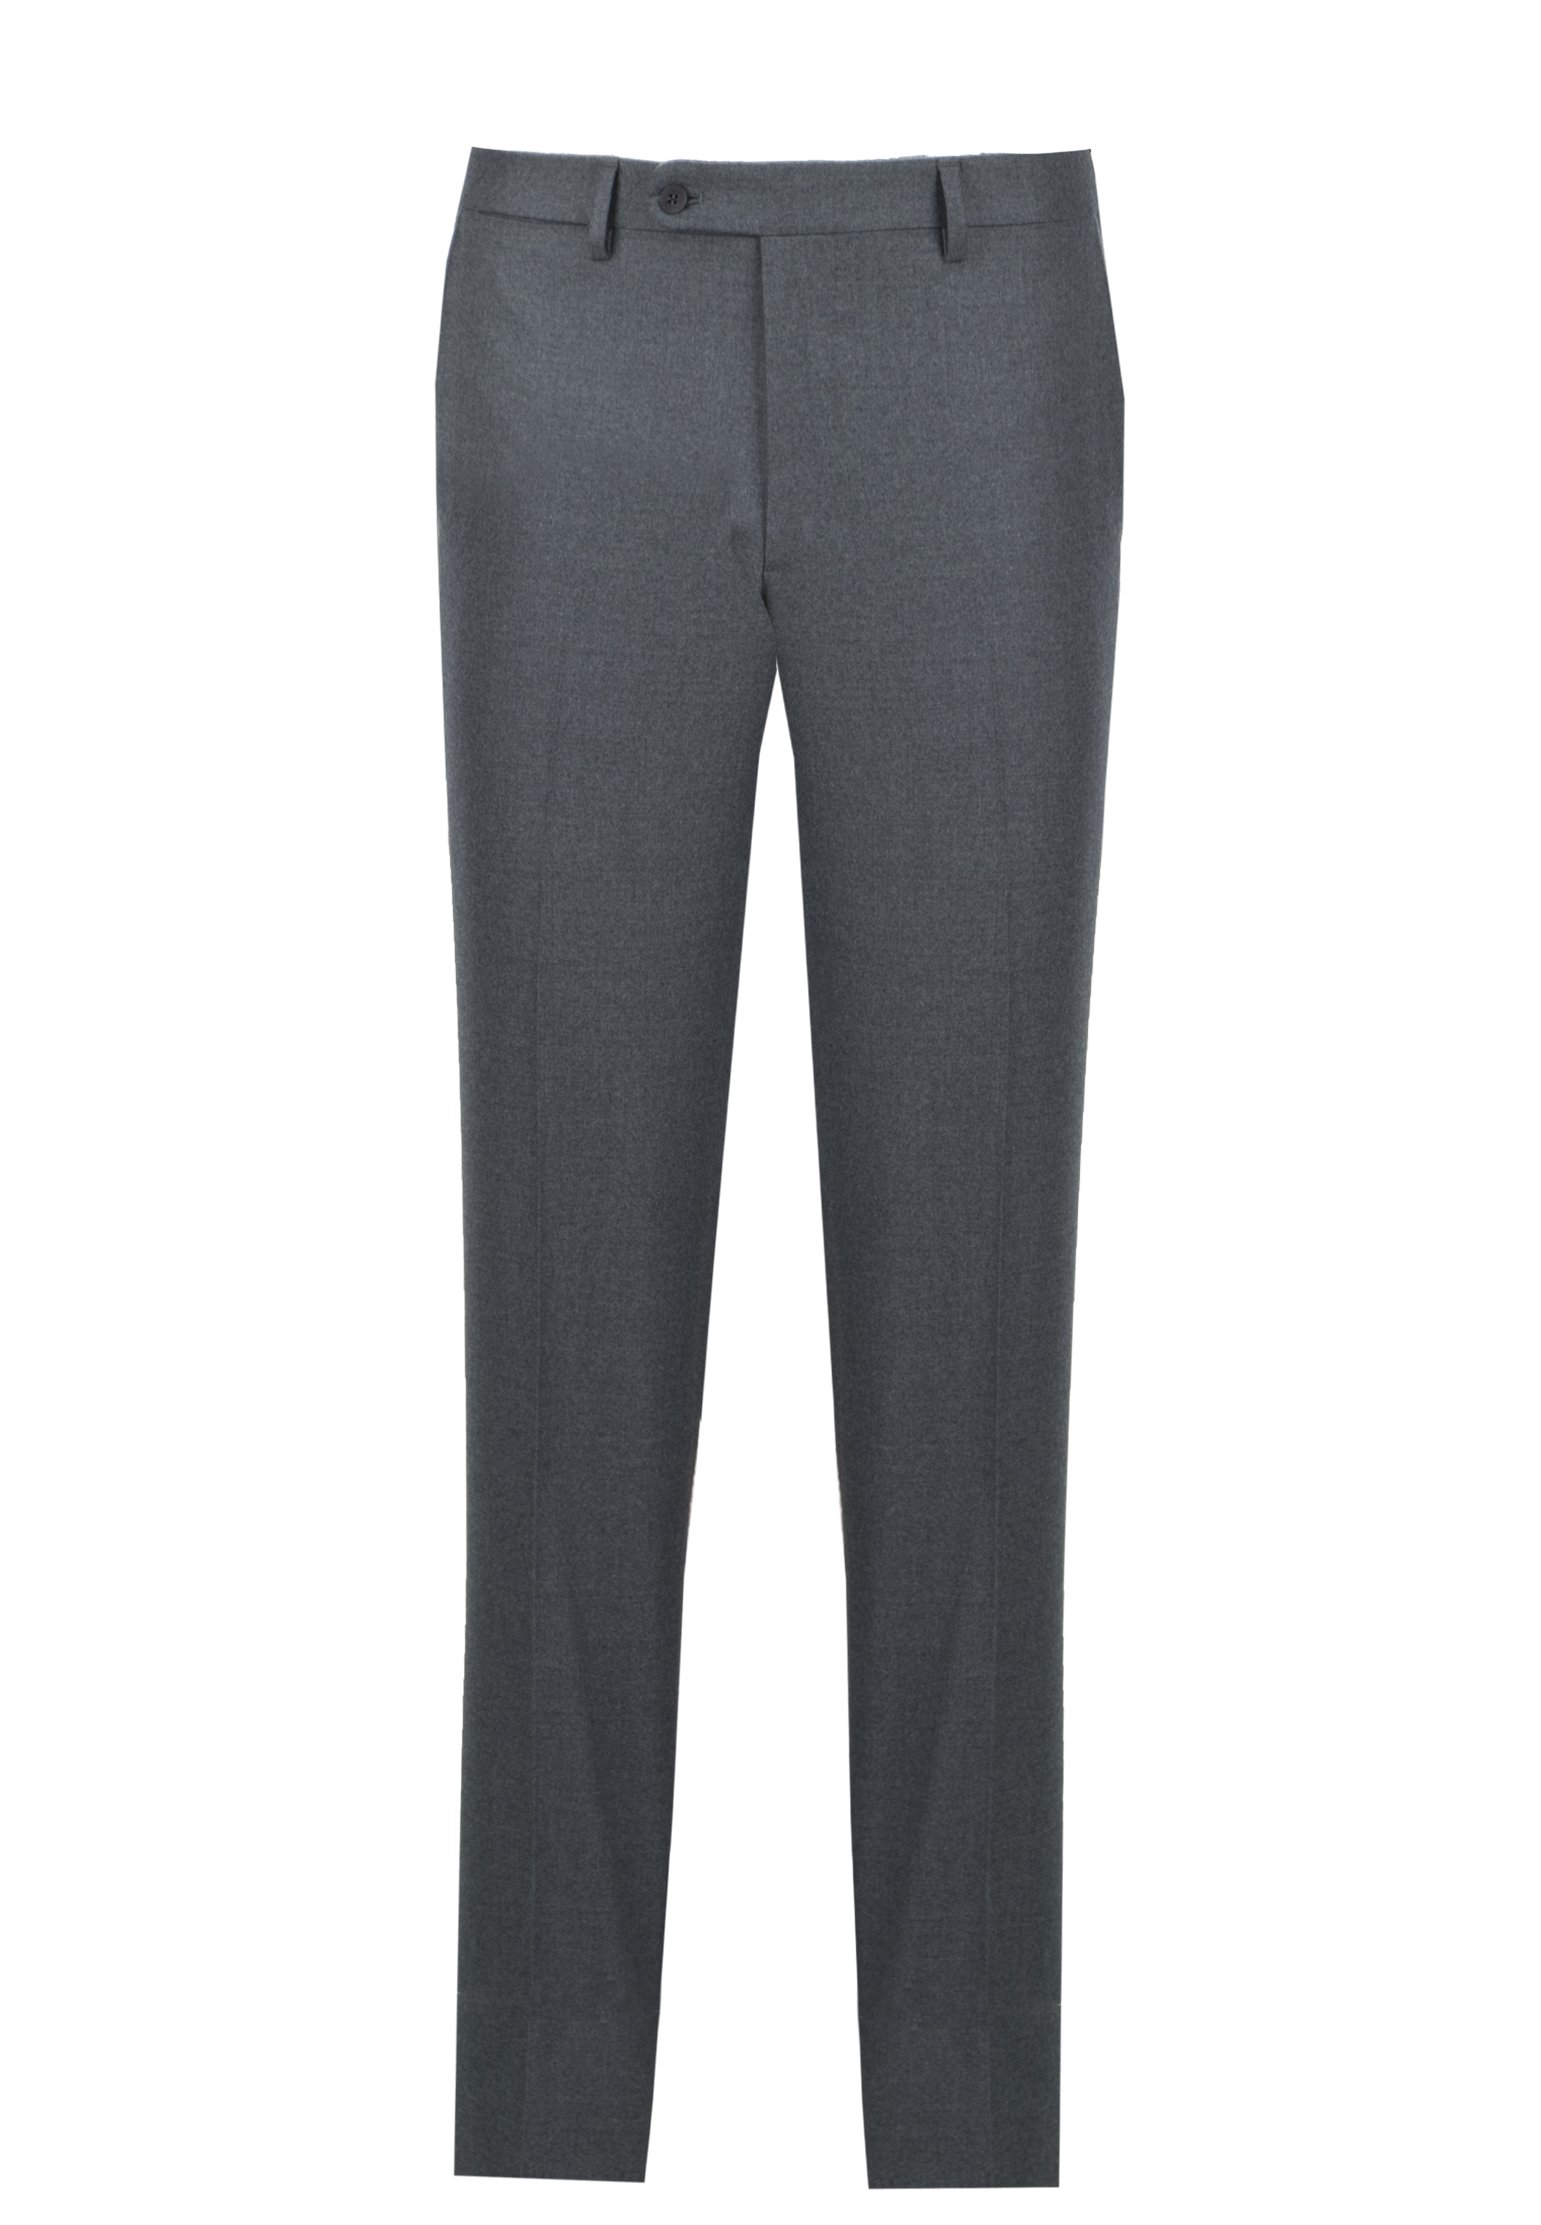 Pants STEFANO RICCI Color: dark grey (Code: 304) in online store Allure